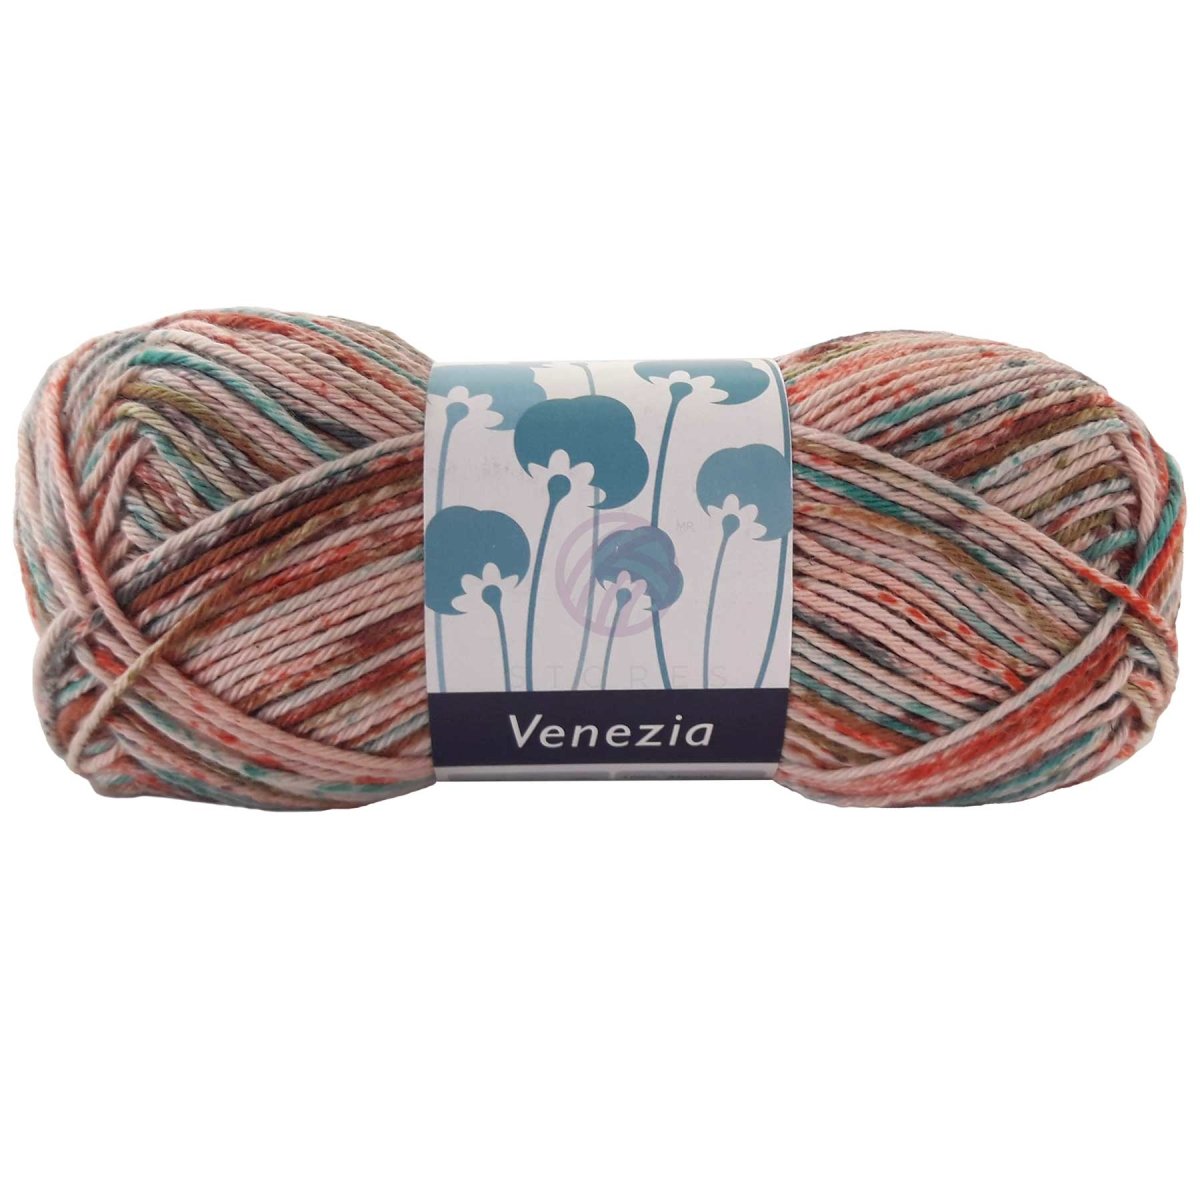 VENEZIA PRINT - Crochetstores195-755606850195757